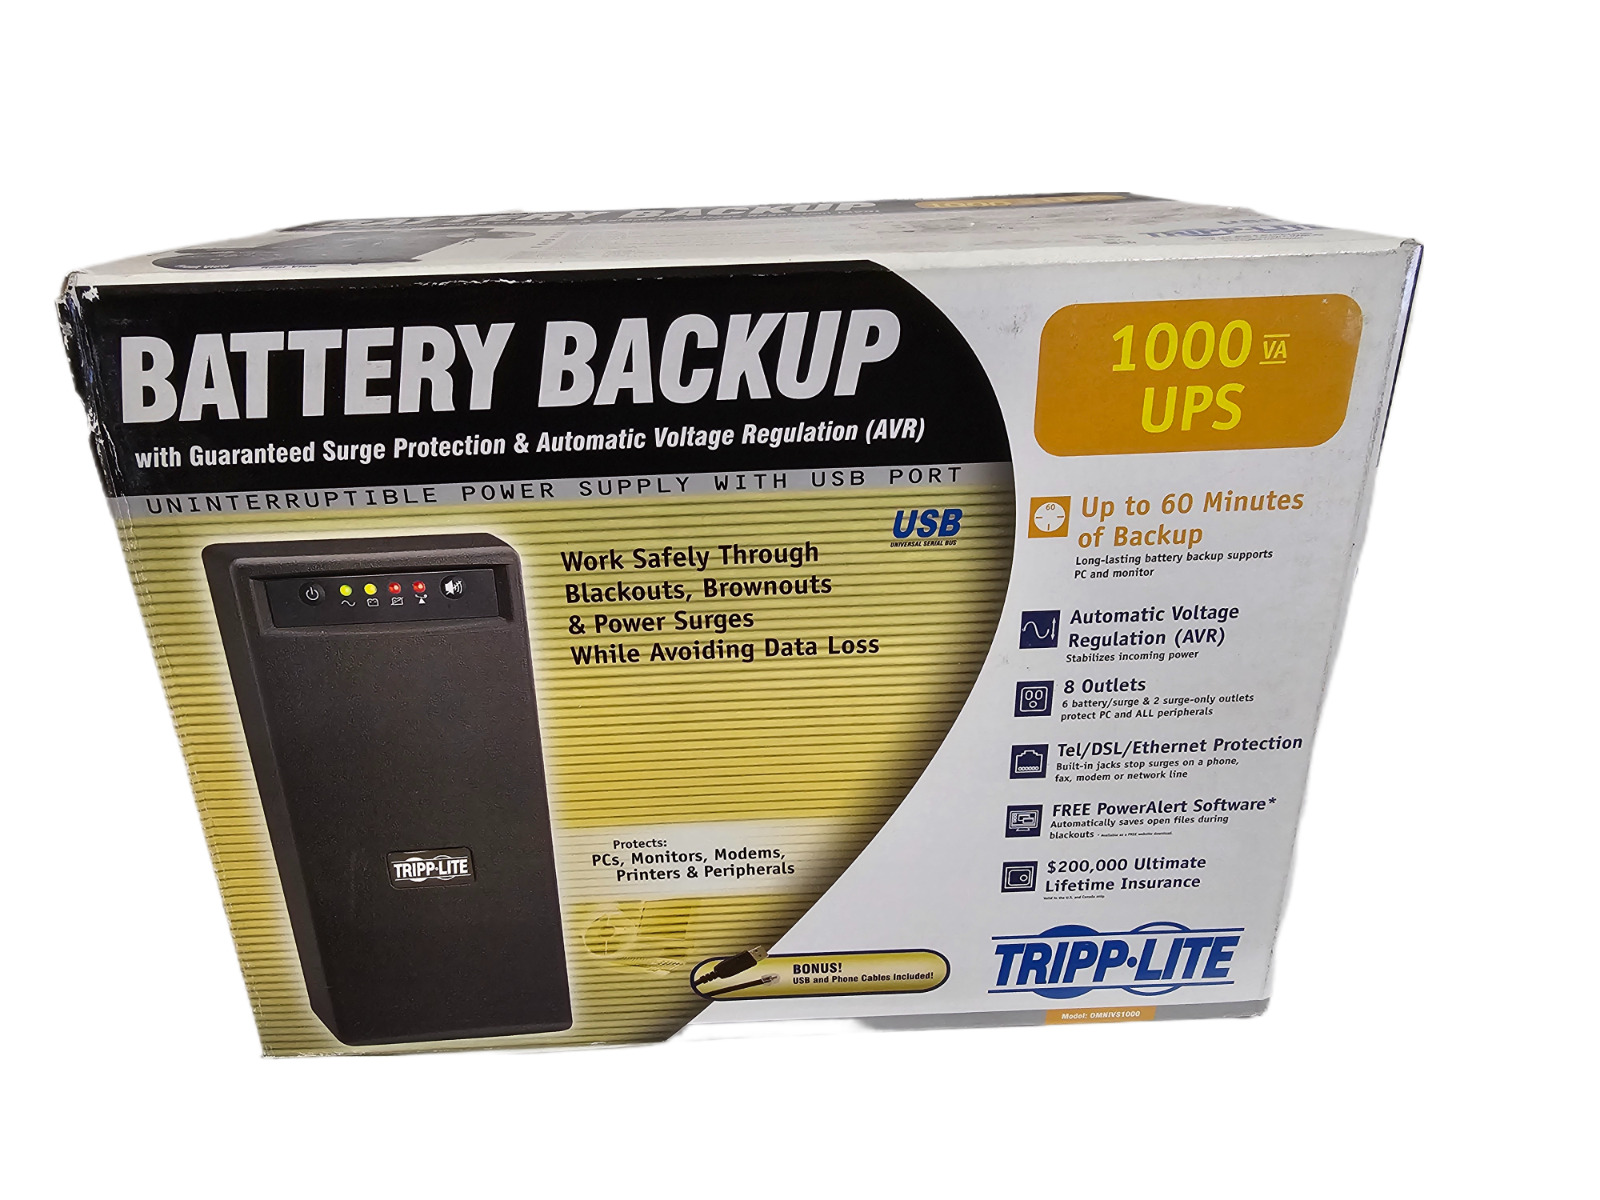 NEW Tripp-Lite Battery Backup OMNIVS1000 1000VA UPS 8 Outlets w/ USB Port